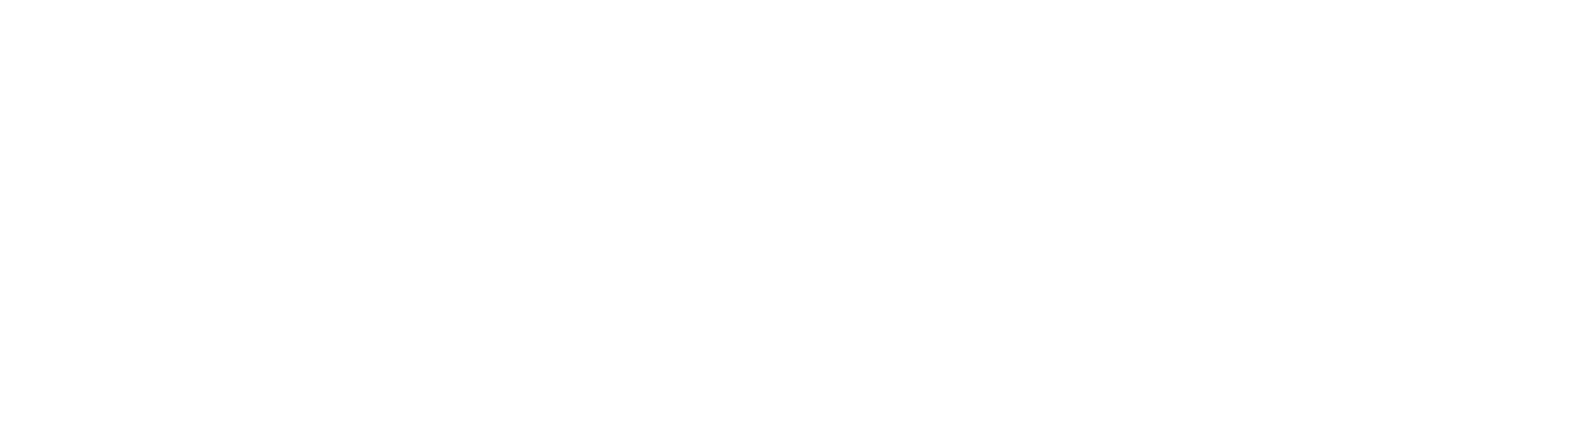 Gamesparcs logo grand pour les fonds sombres (PNG transparent)